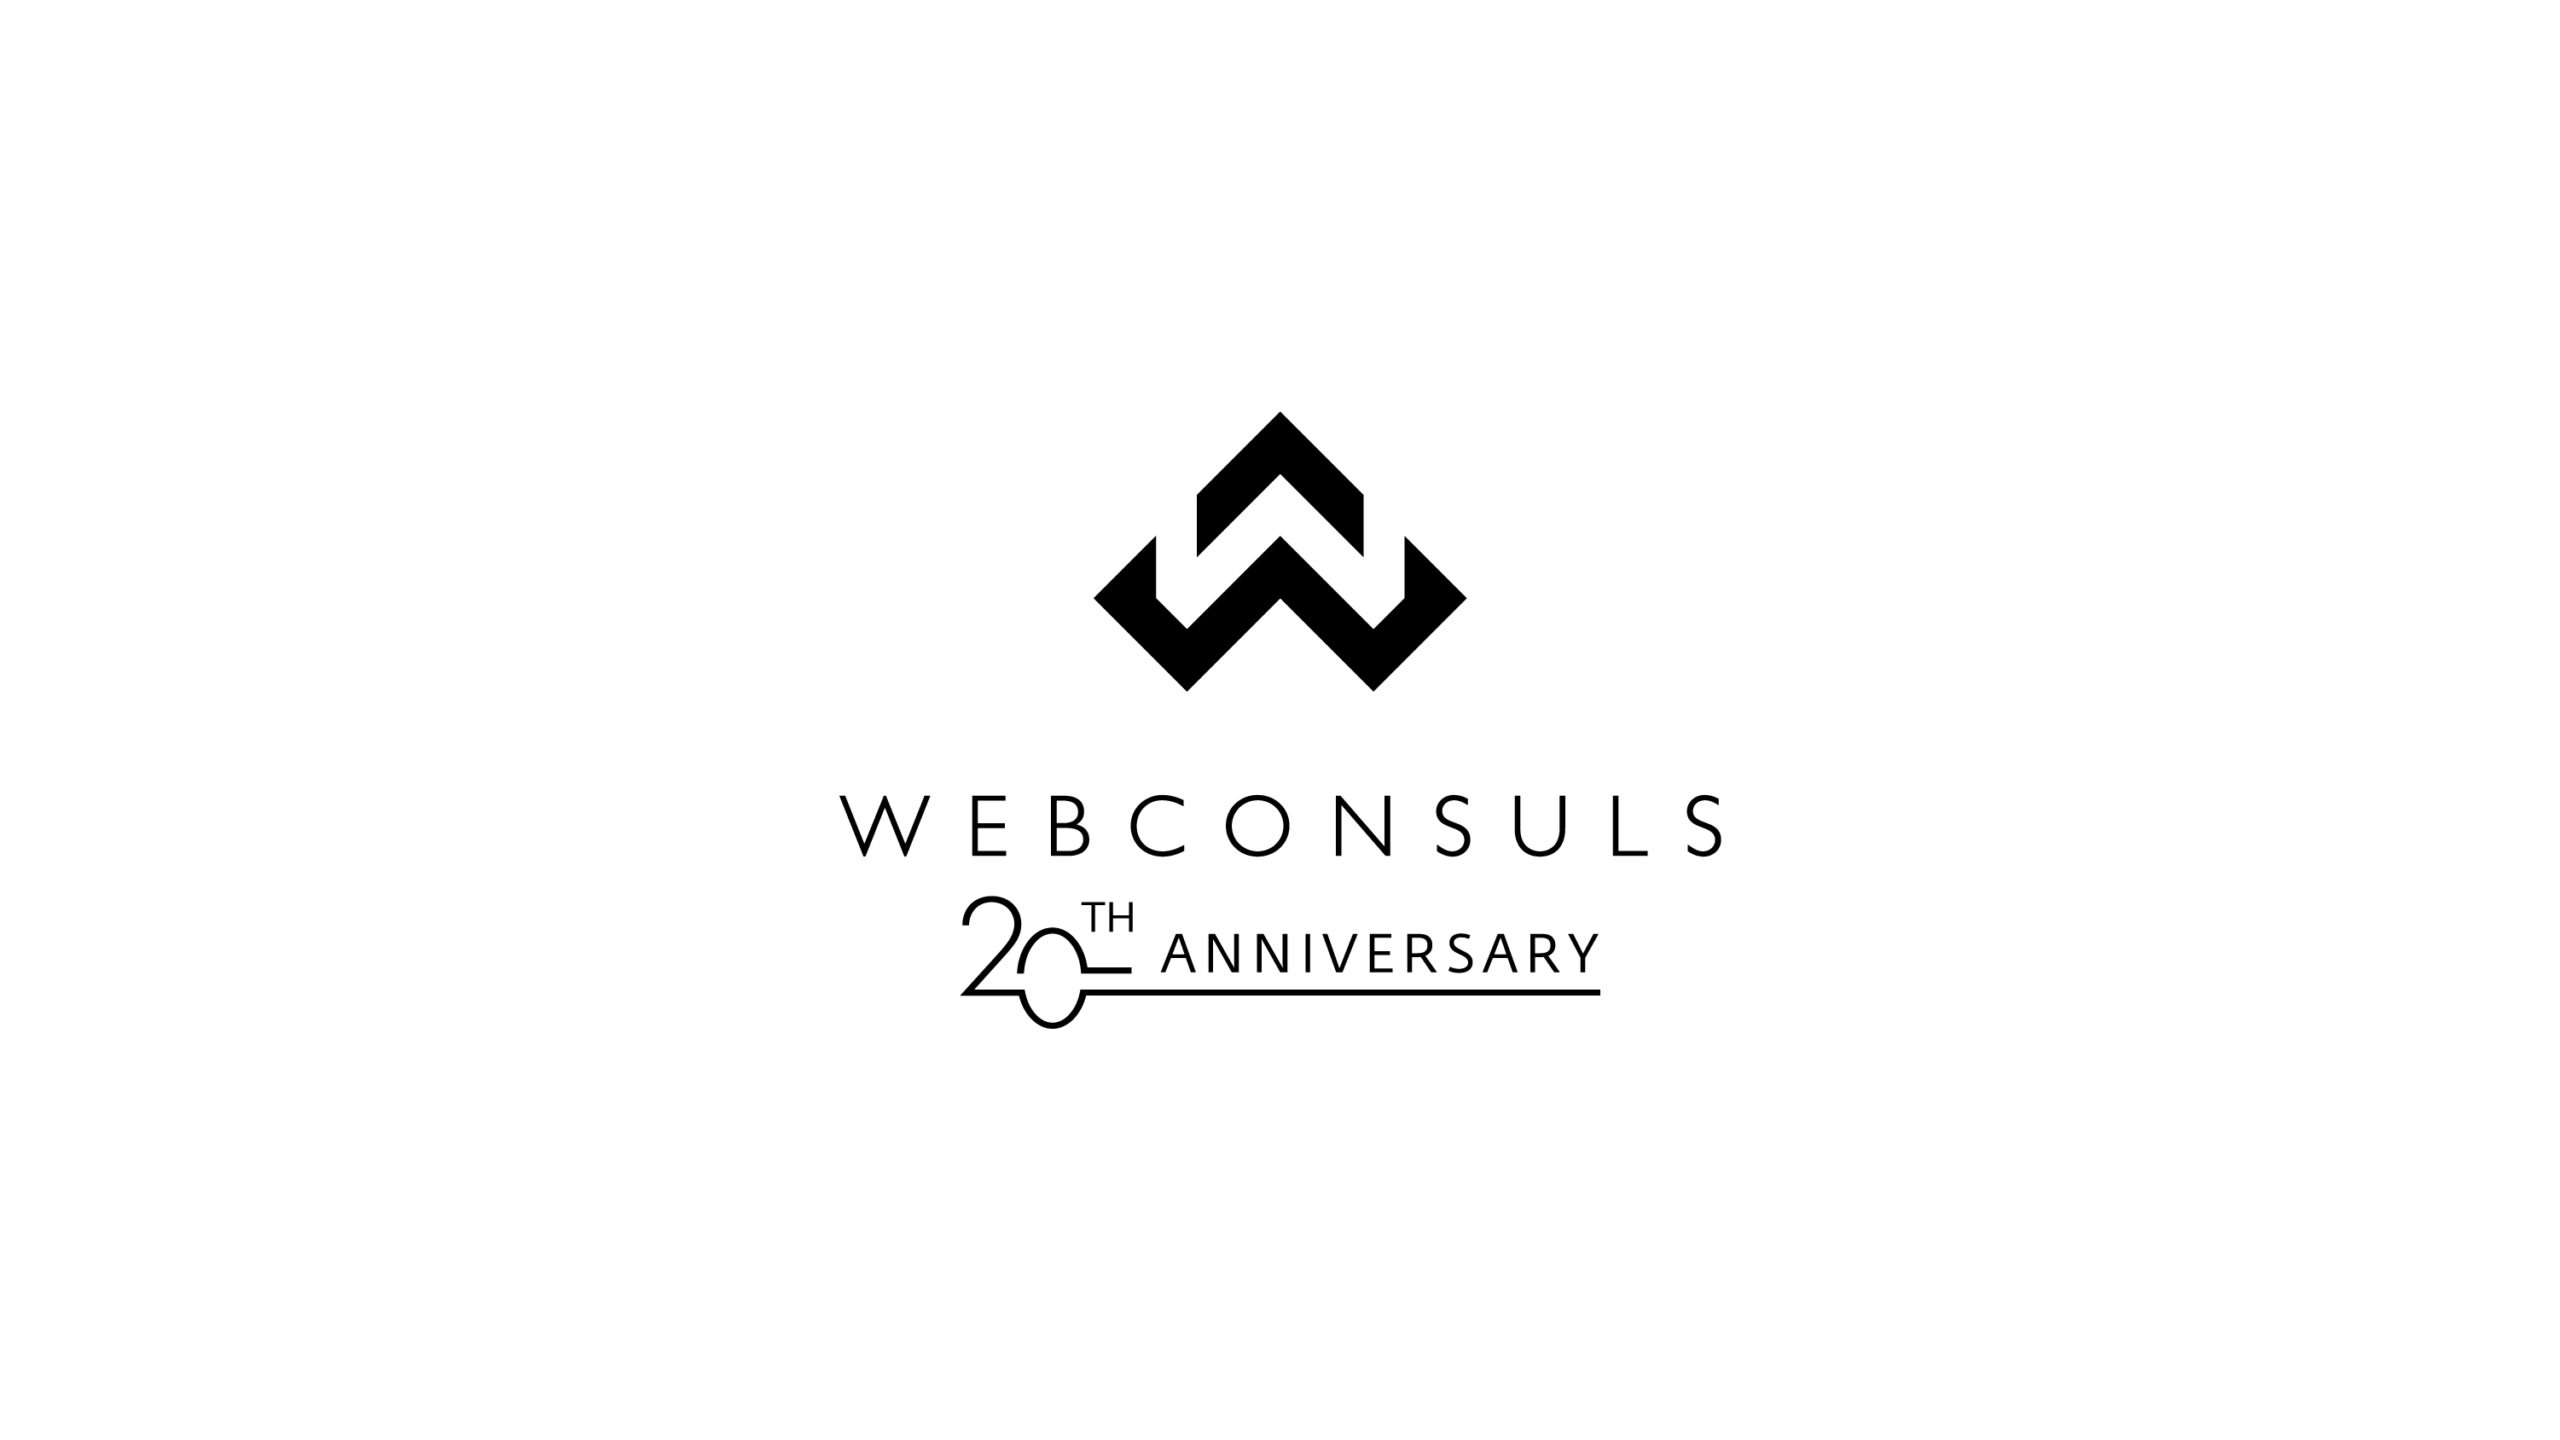 Webconsuls Celebrates 20th Anniversary